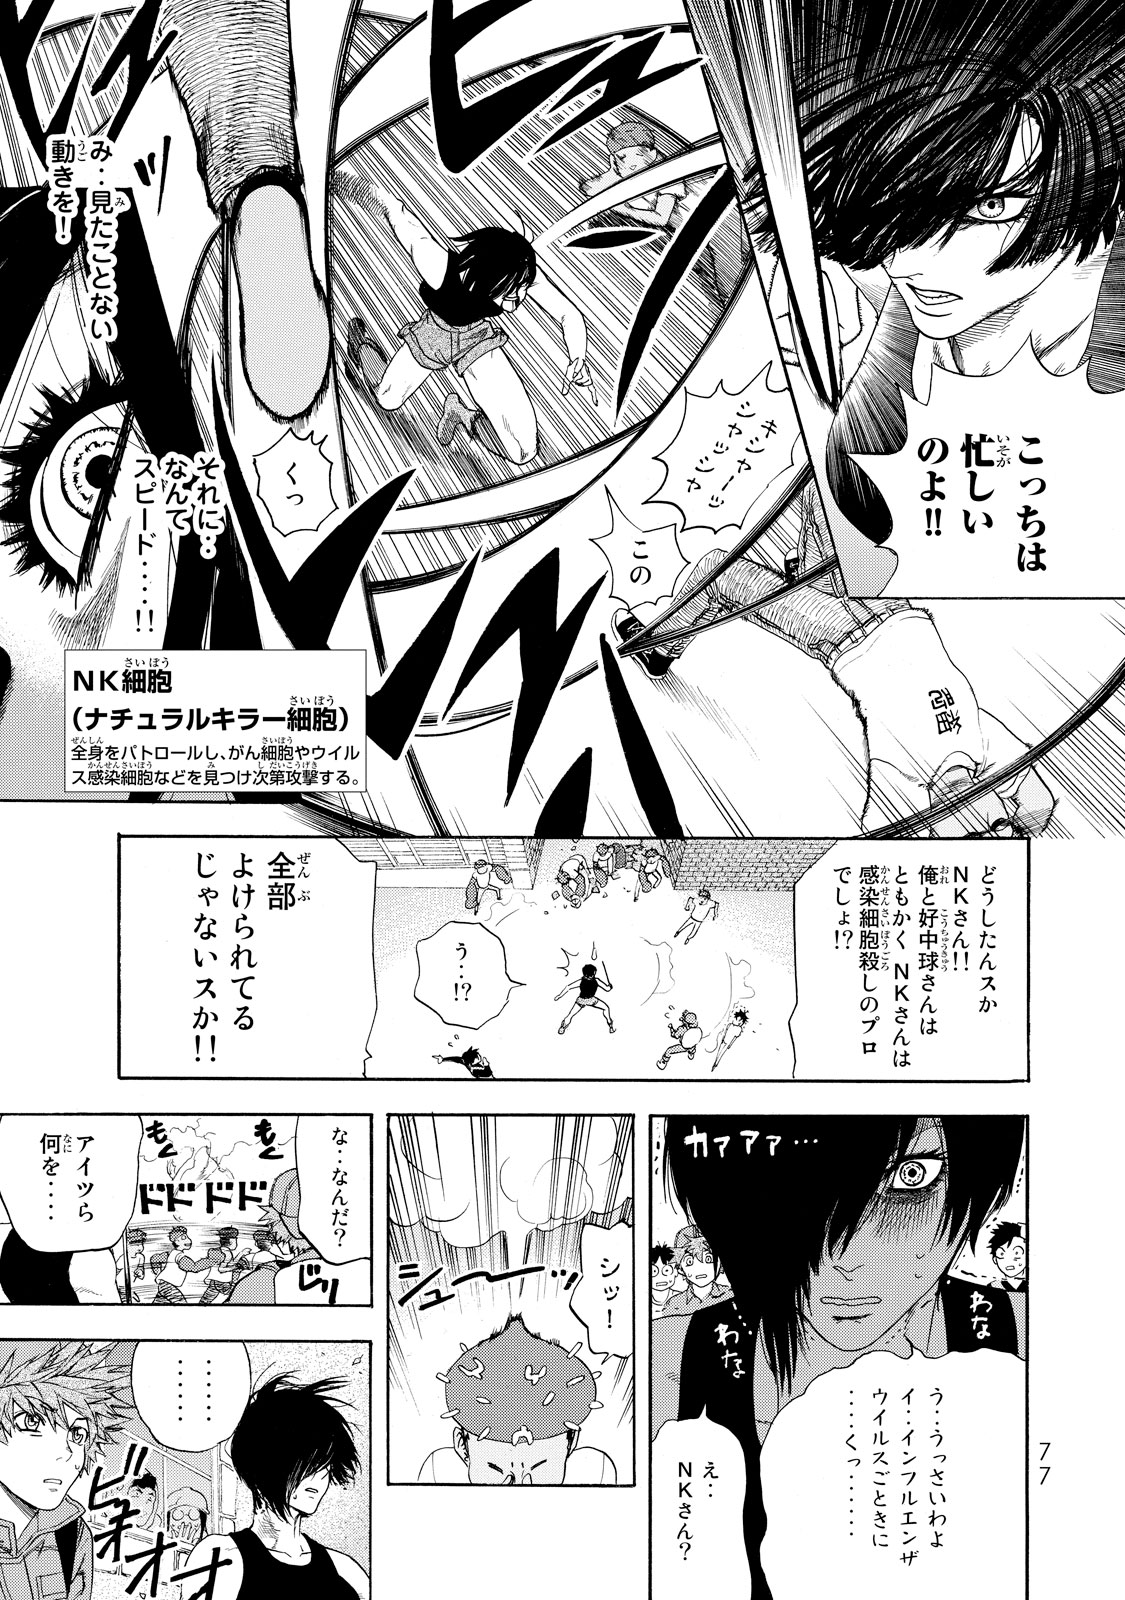 Hataraku Saibou - Chapter 22 - Page 3